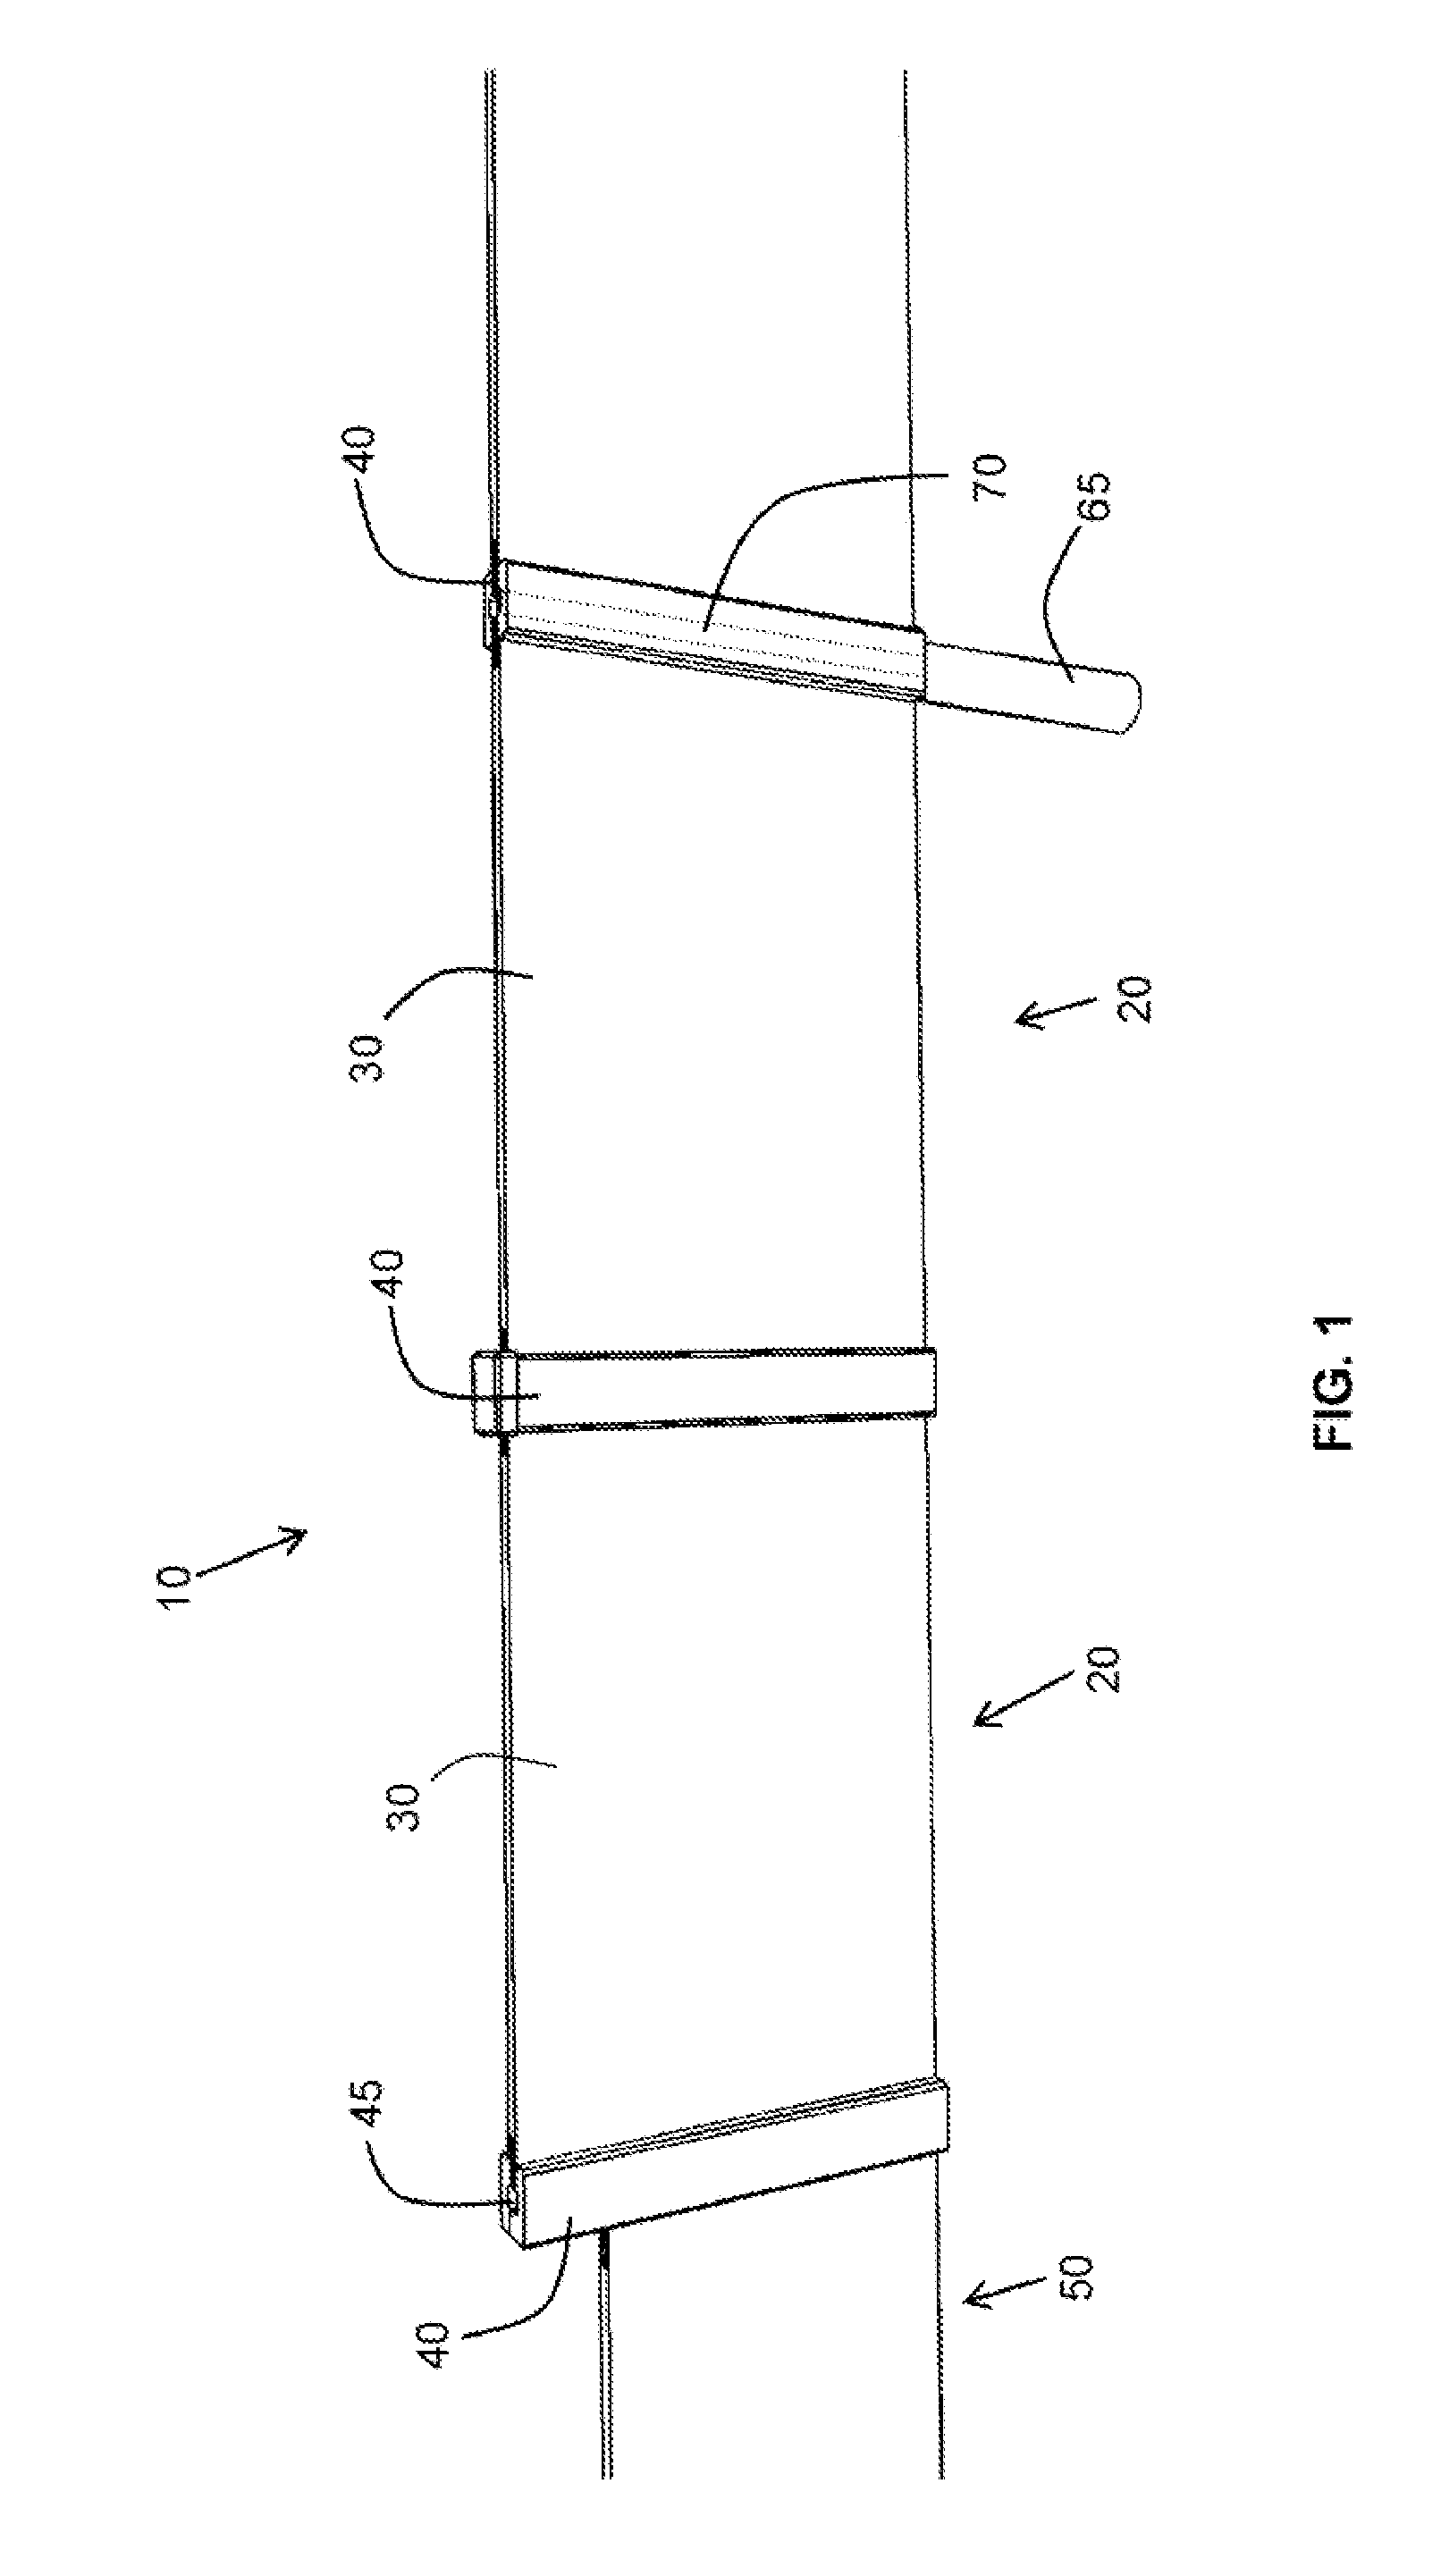 Modular concrete fence system